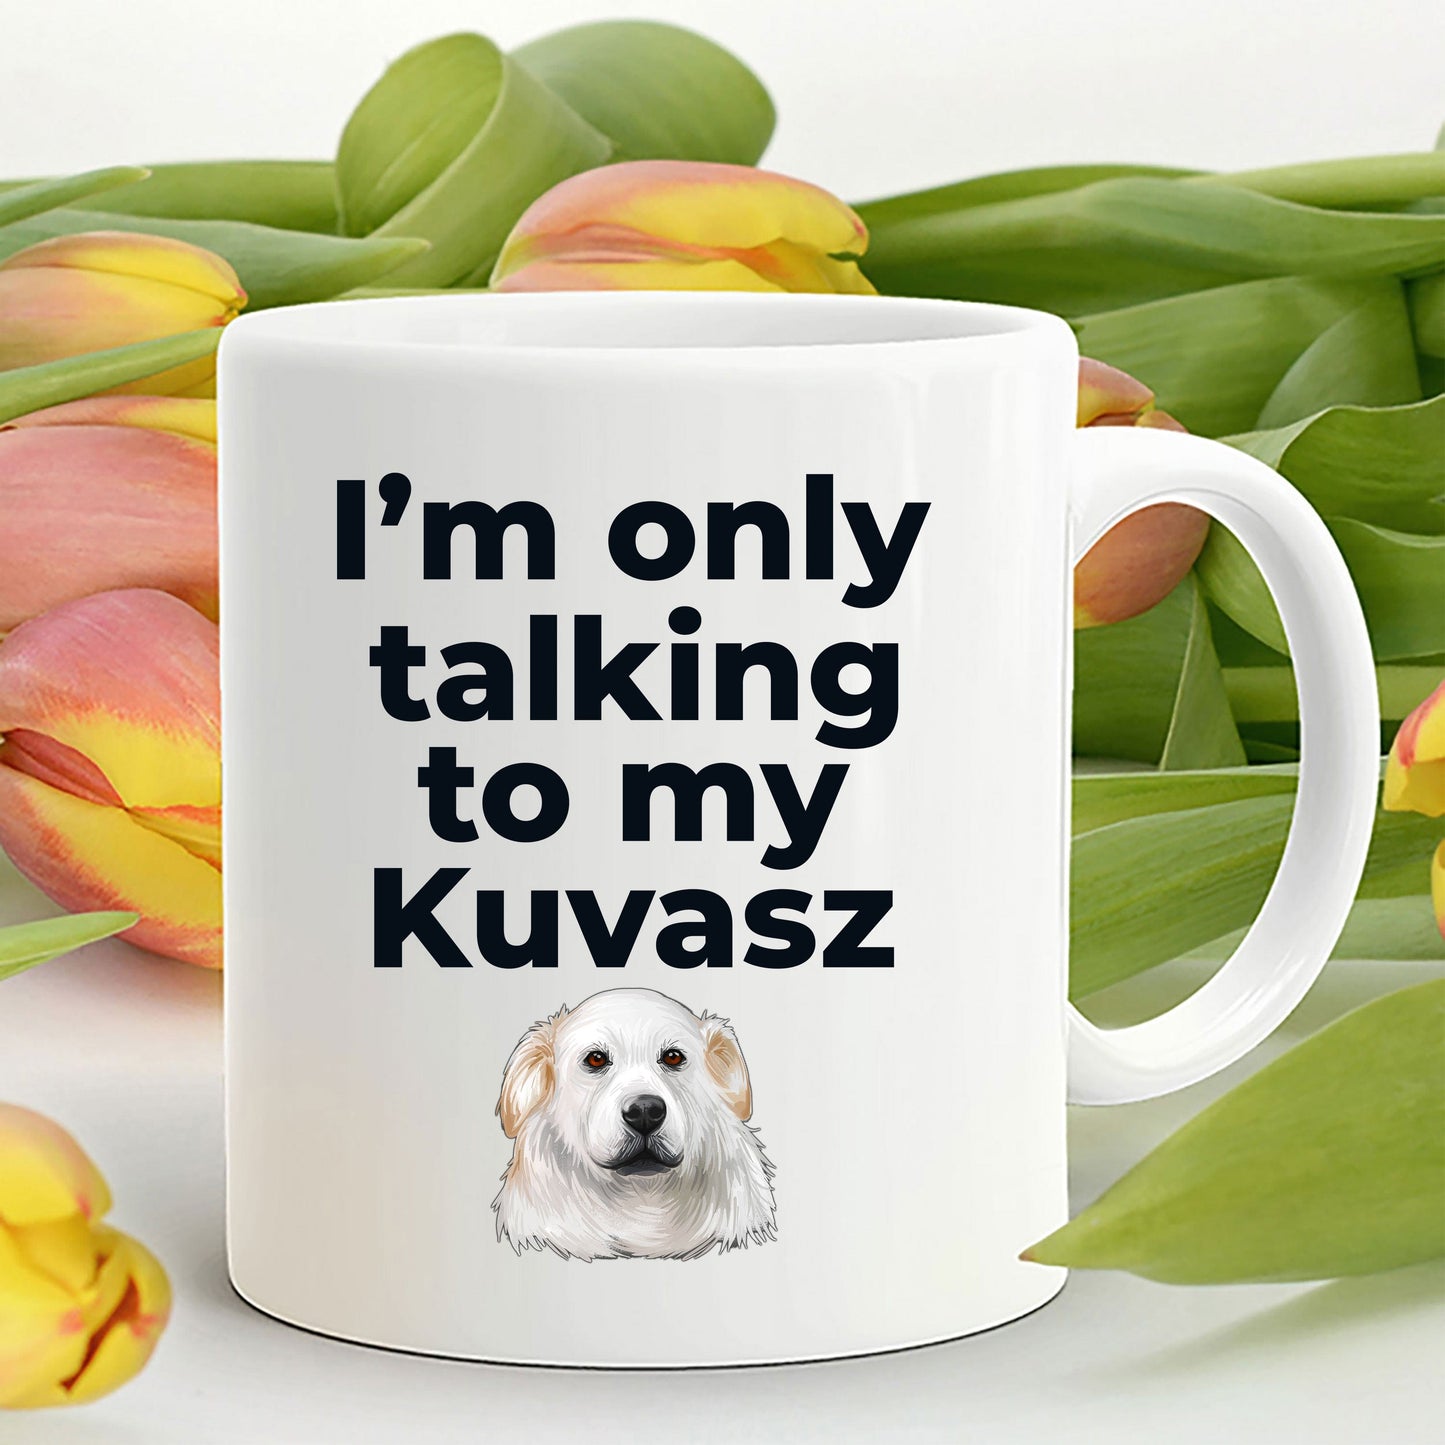 Kuvasz Dog Funny Coffee Mug - I'm only talking to my Kuvasz